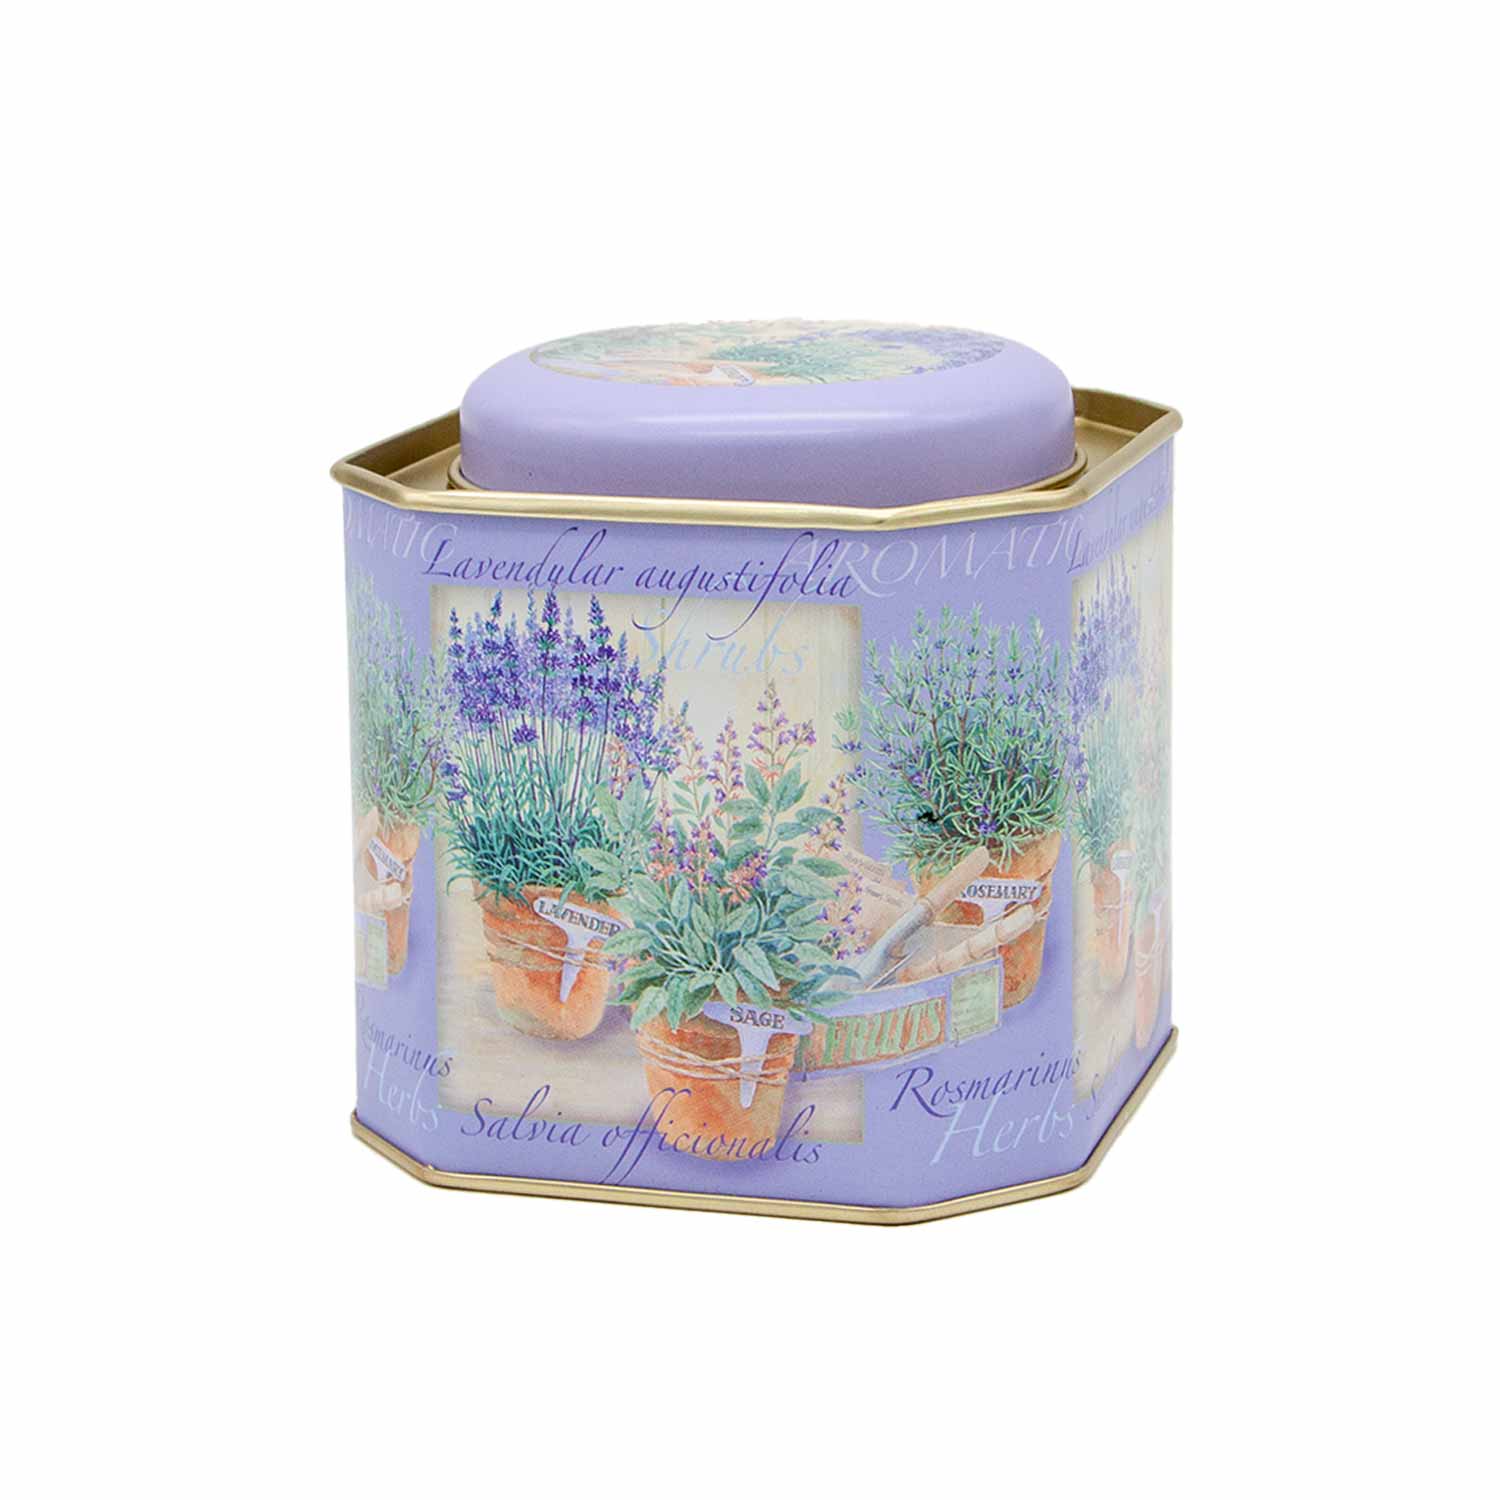 Teedose „Rosmarin & Lavendel“ mit Stülpdeckel, ca. 200 g